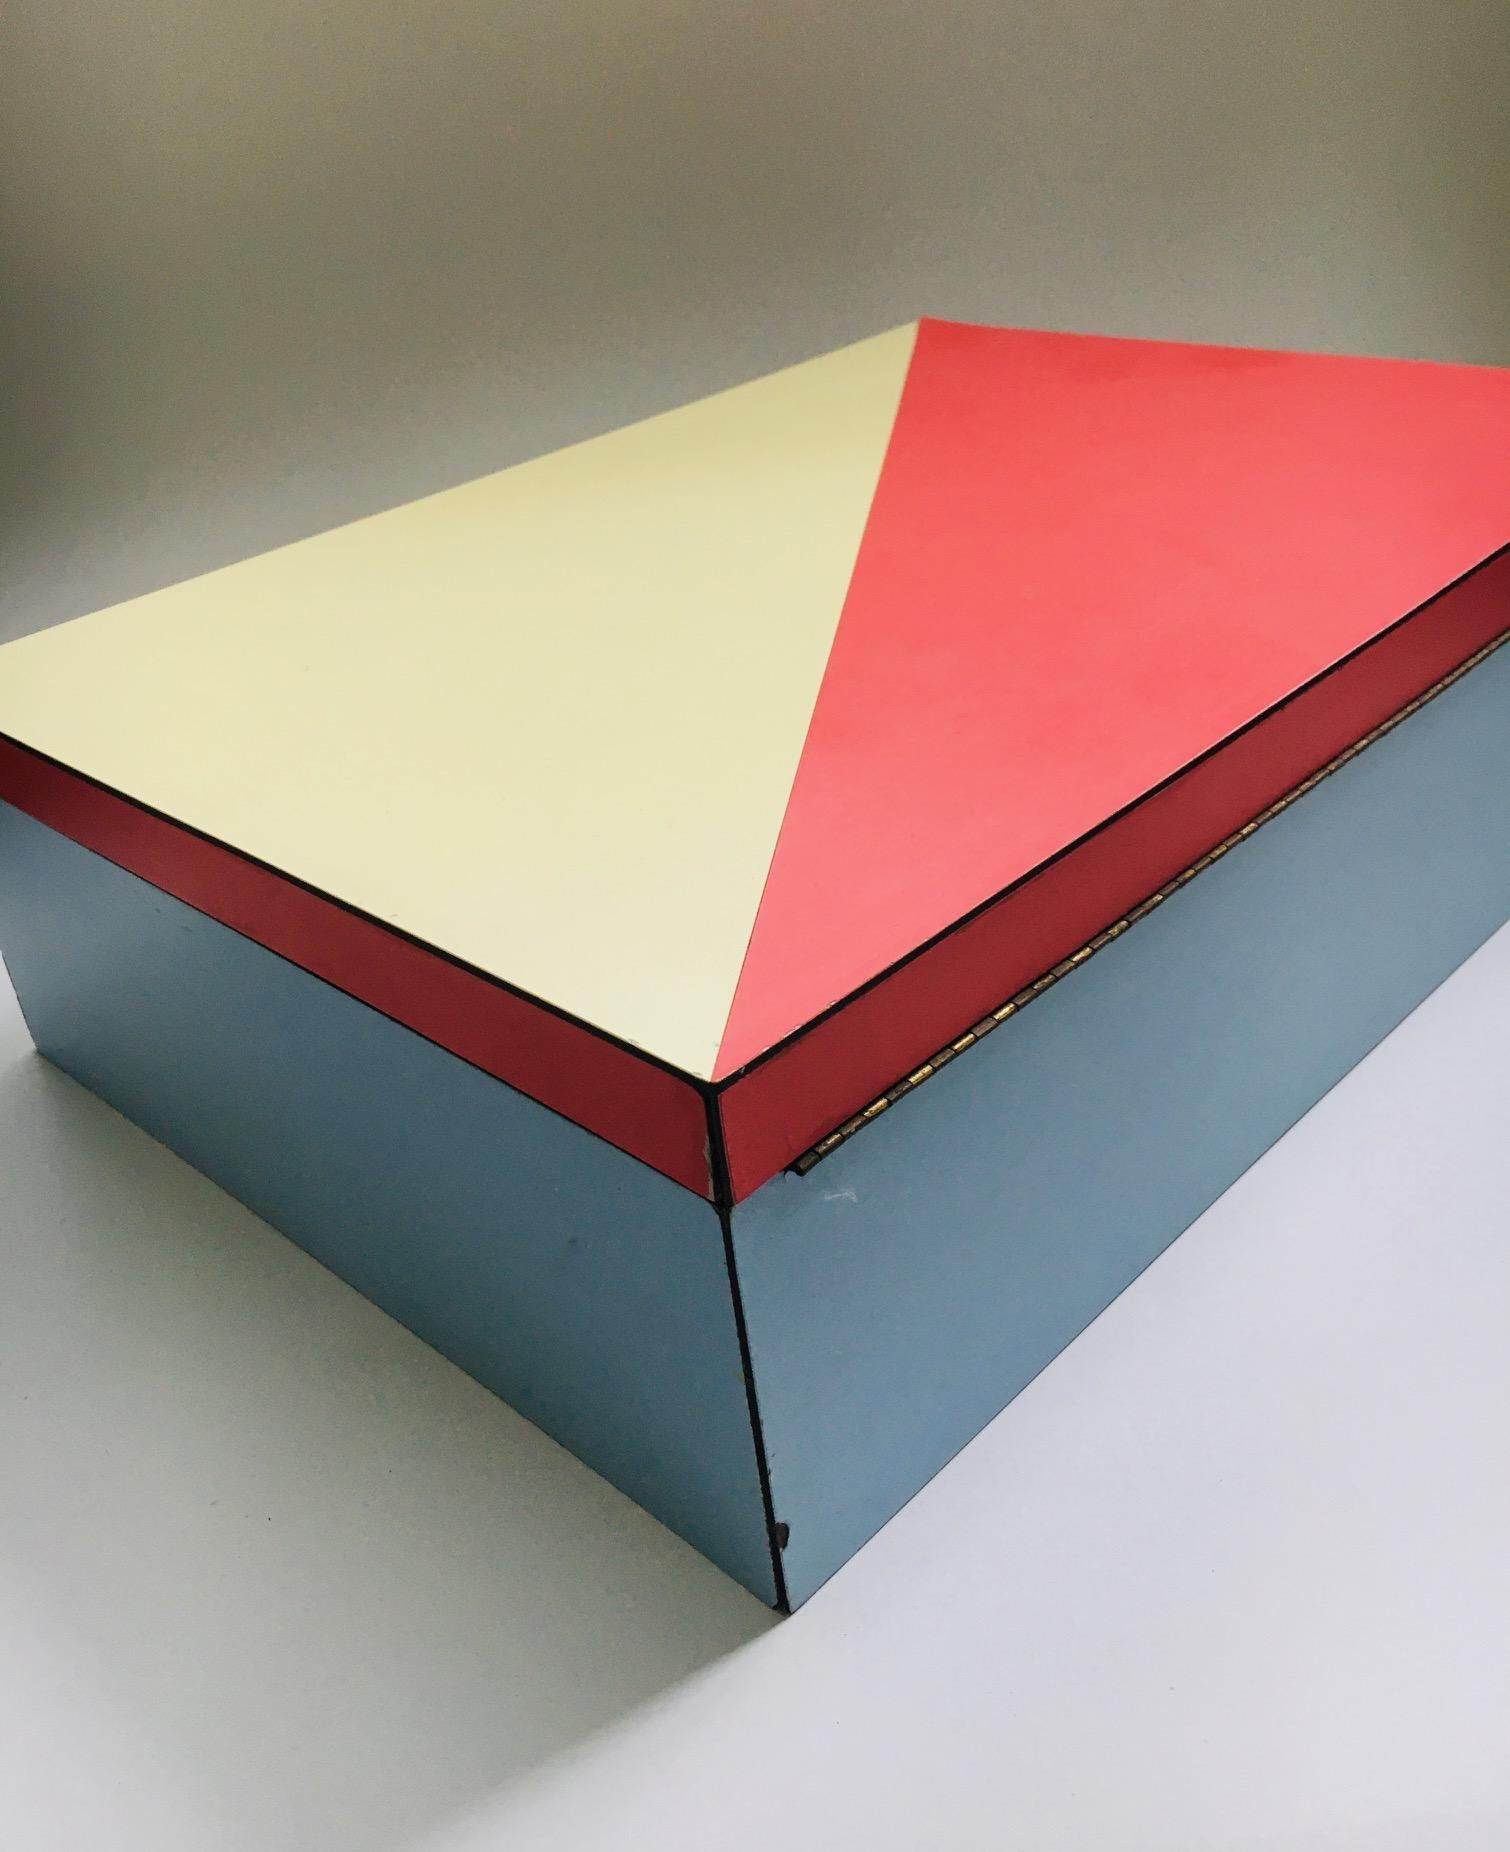 Midcentury Modern Dutch Design STIJL Modernism Letter Box, 1950's Holland For Sale 5